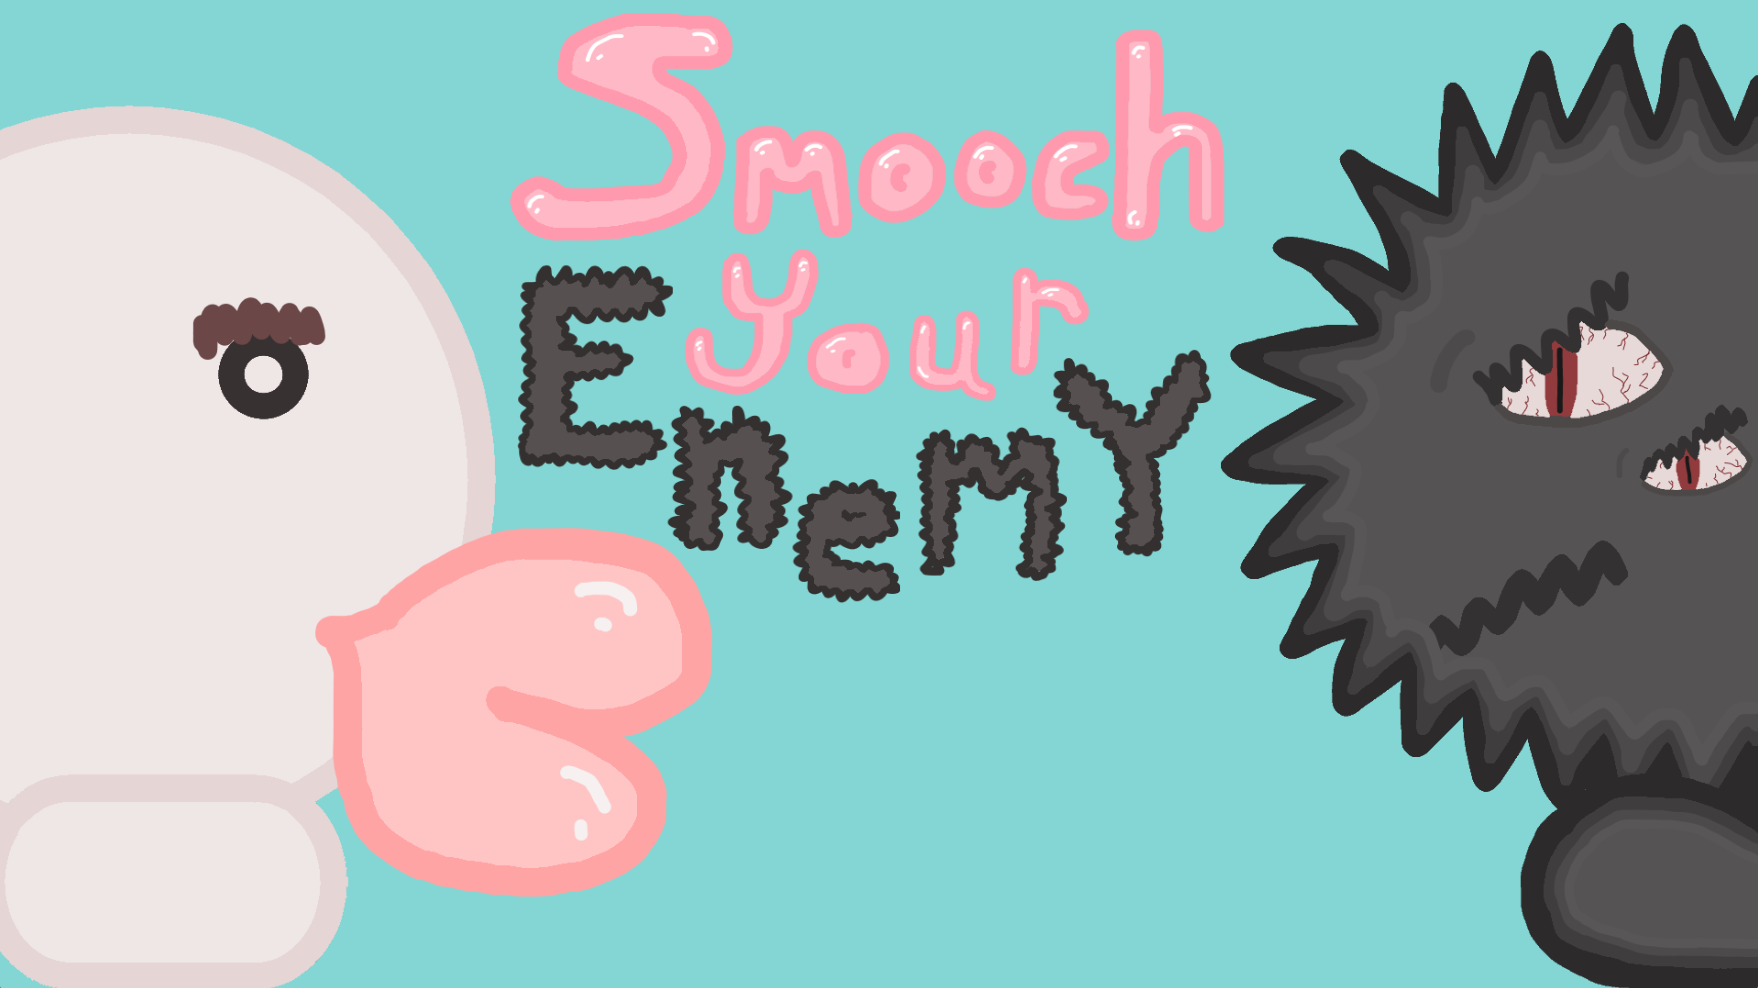 Smooch Your Enemy!